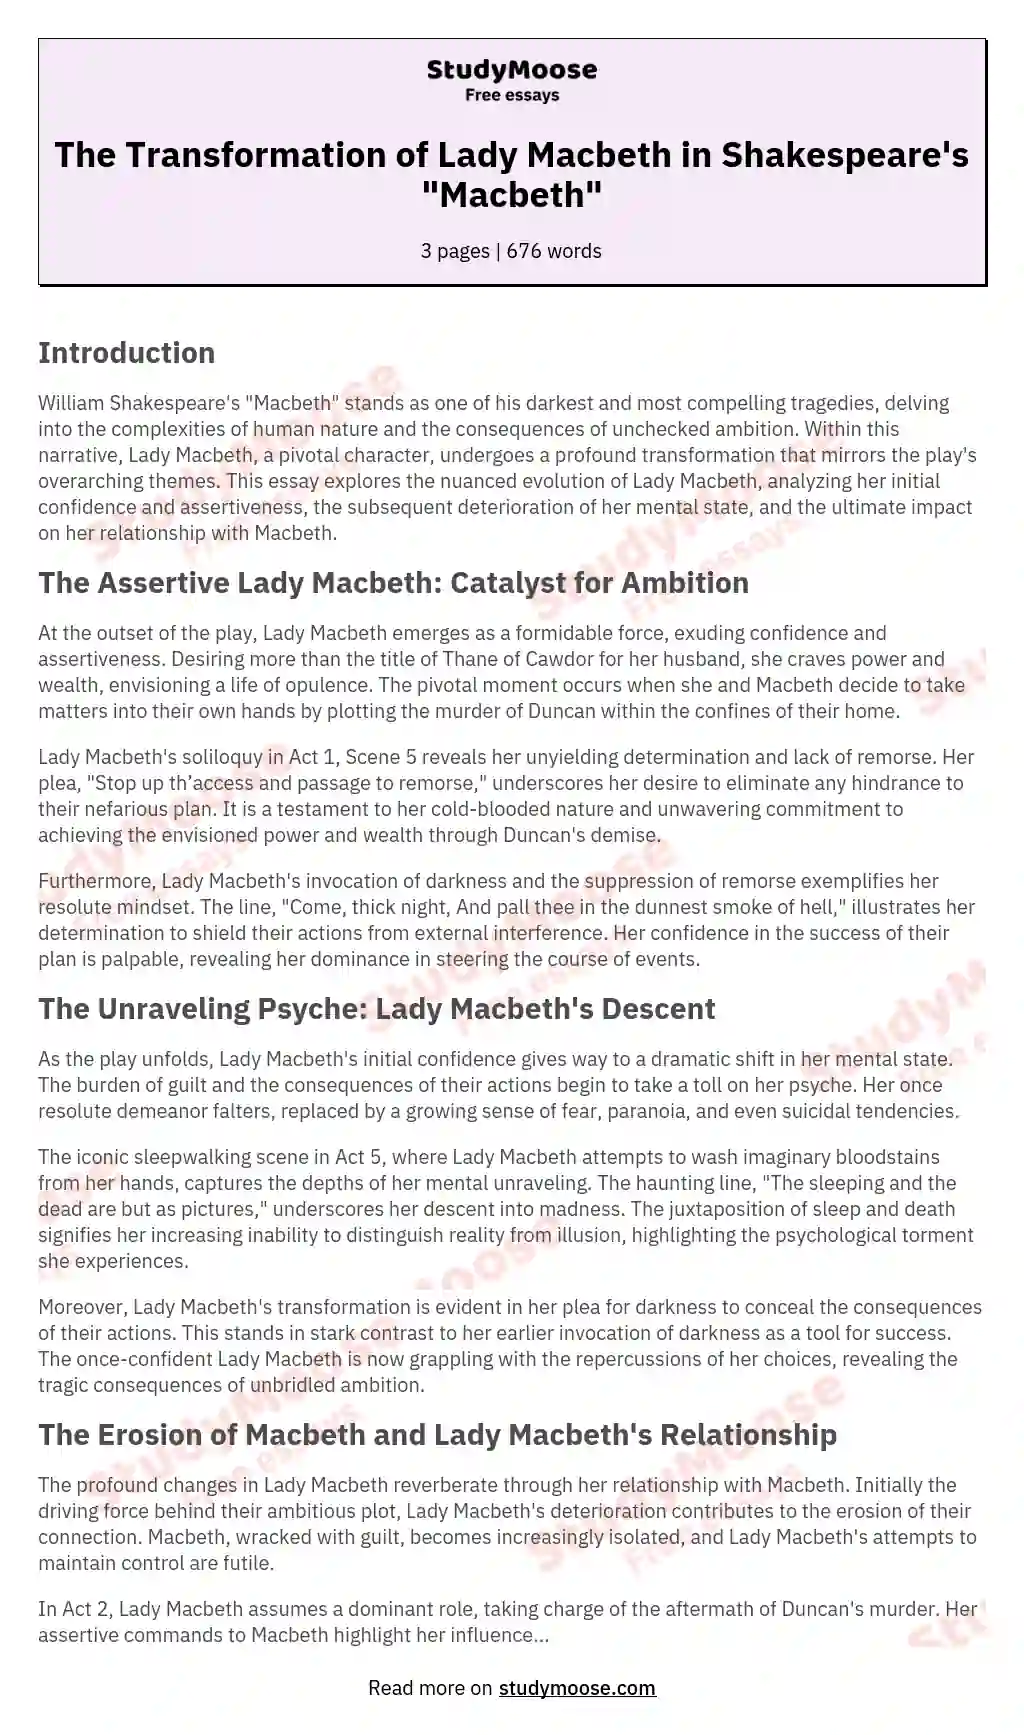 The Transformation of Lady Macbeth in Shakespeare's "Macbeth" essay